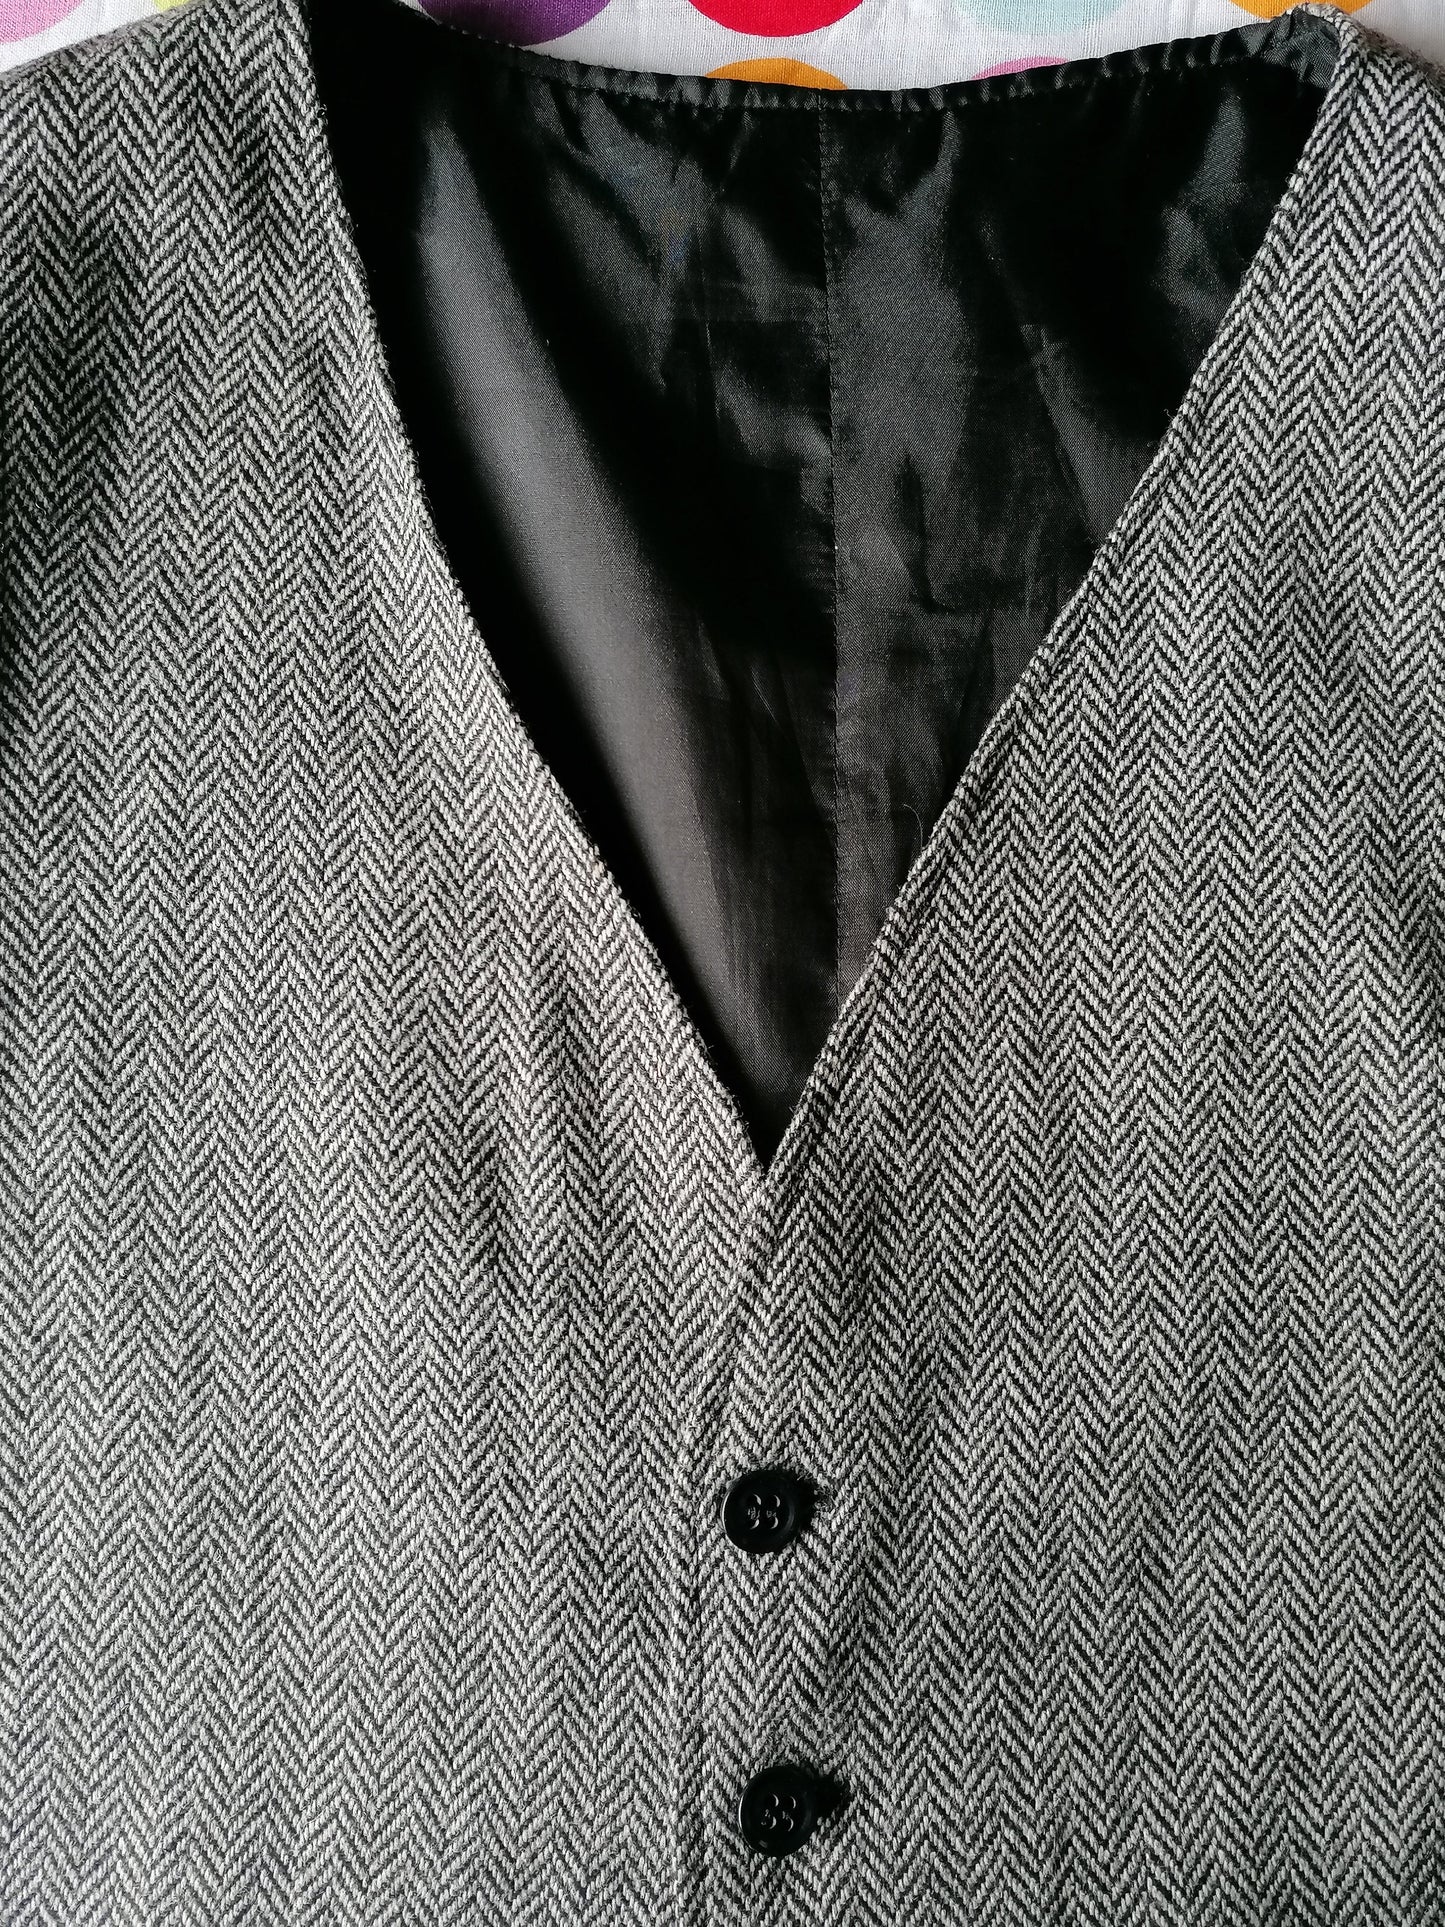 Vintage waistcoat. Black white herringbone motif. Size S.